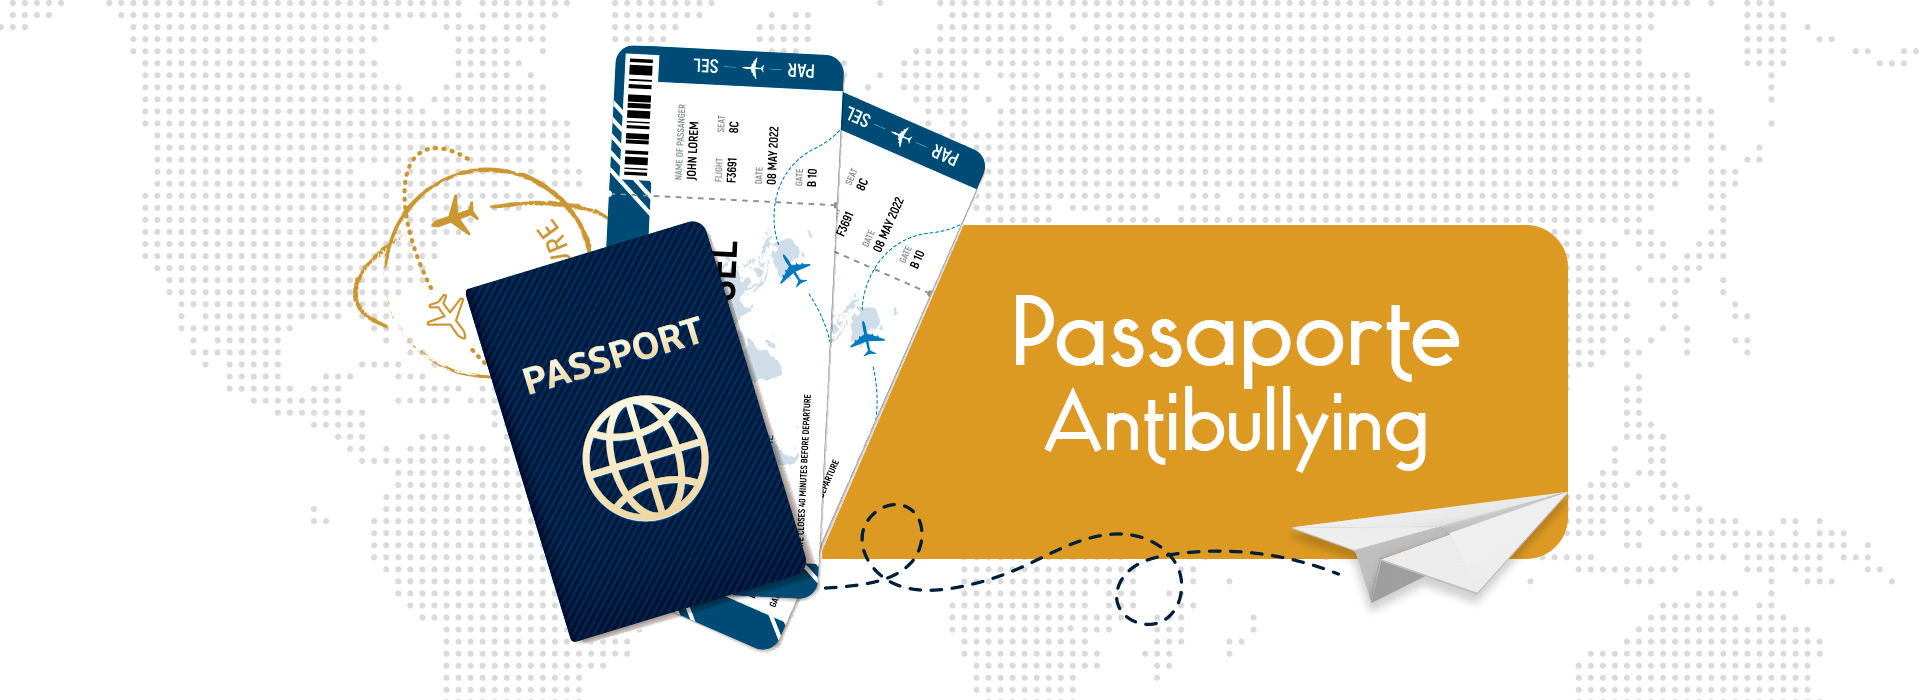 Passaporte Antibullying - Capa Curso